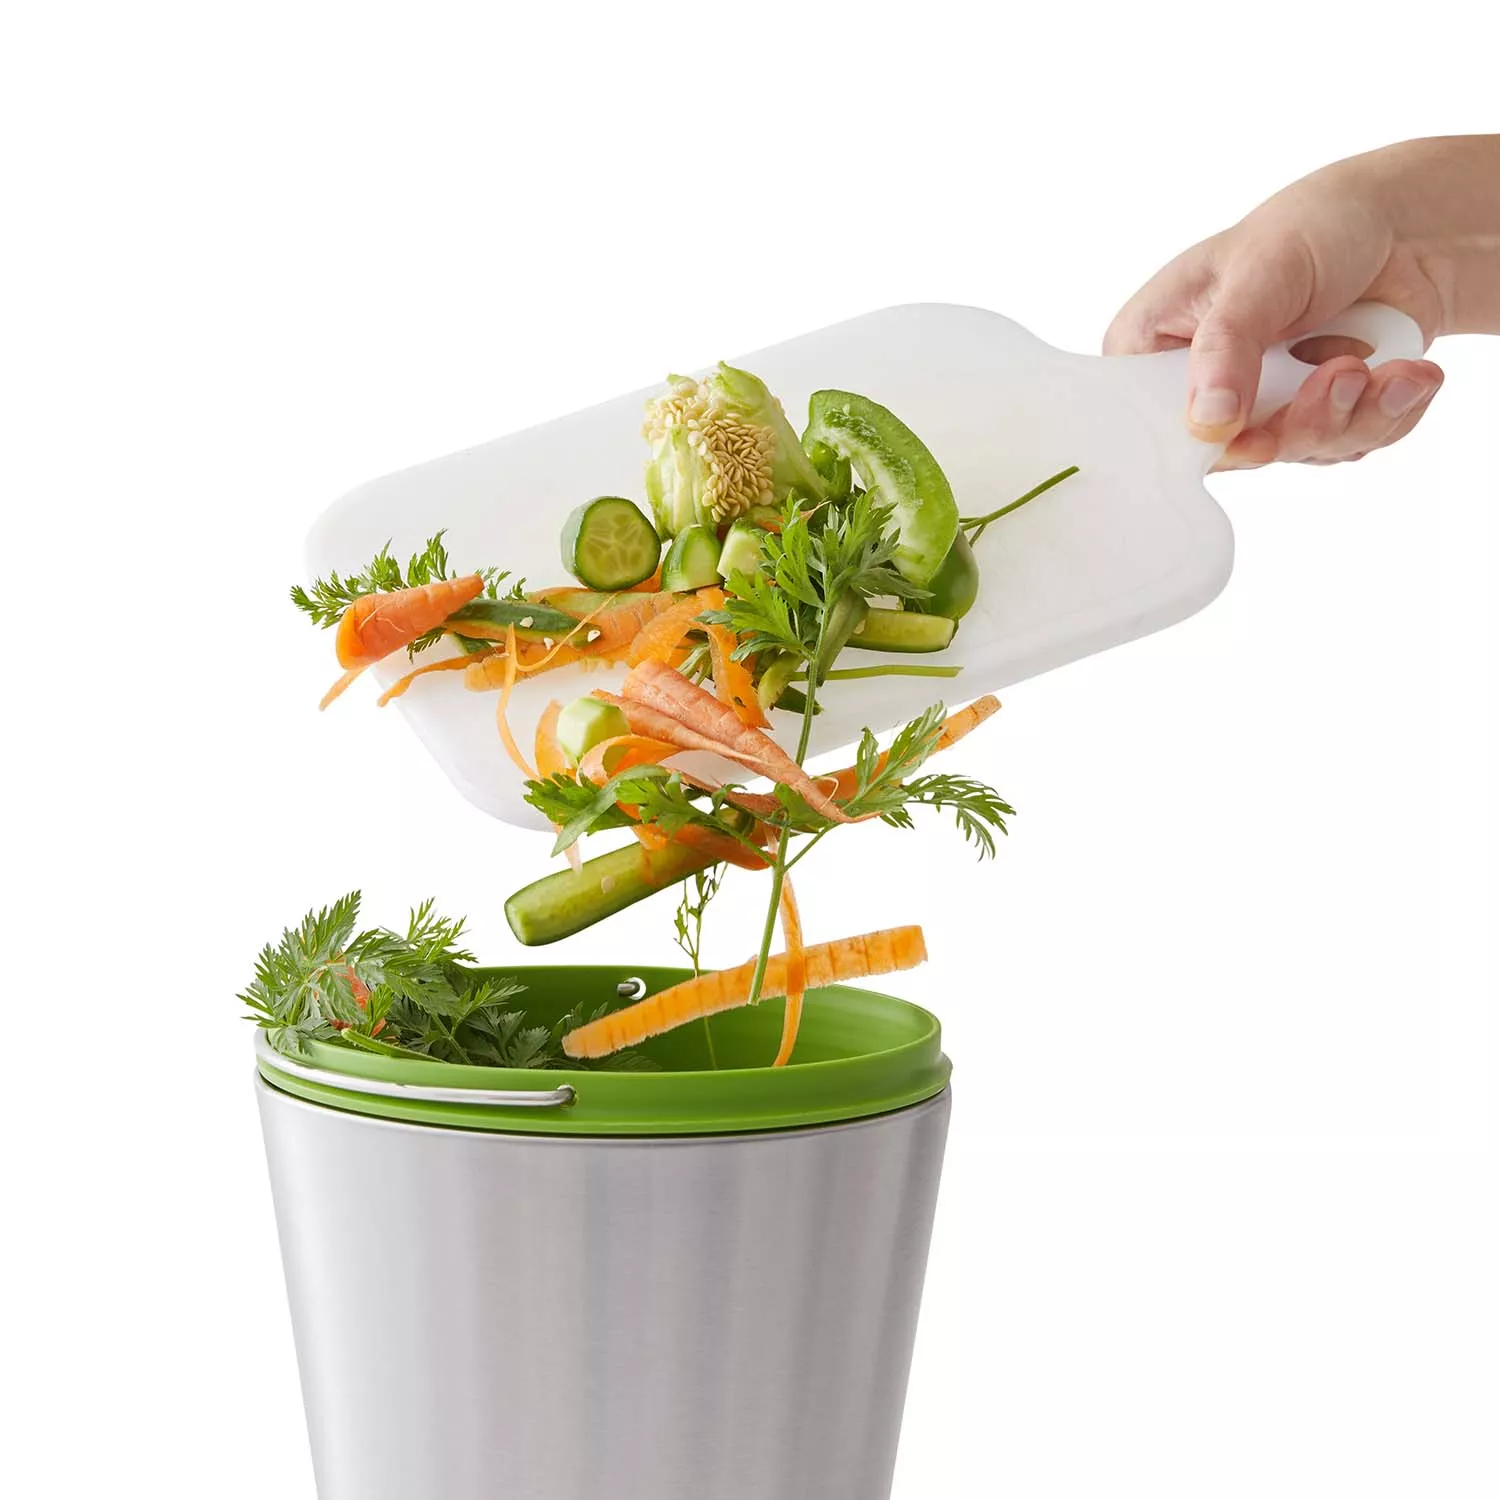 Chef'n EcoCrock Plastic Compost Bin